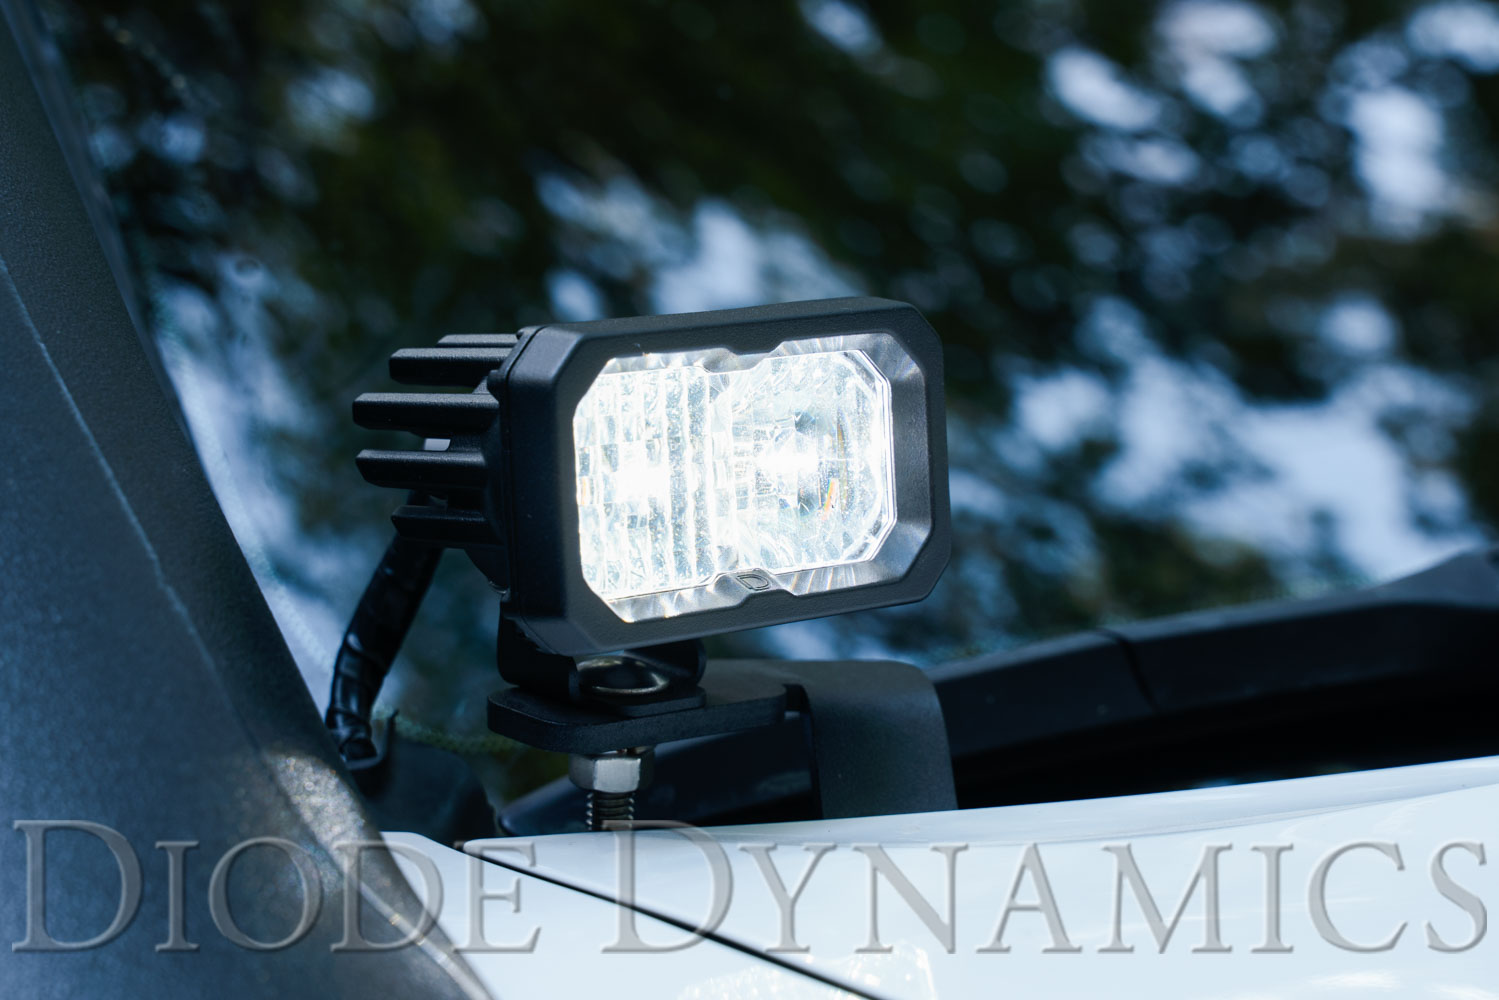 Diode Dynamics Stage Series 2 Inch LED Pod, Sport White Flood Standard WBL Each